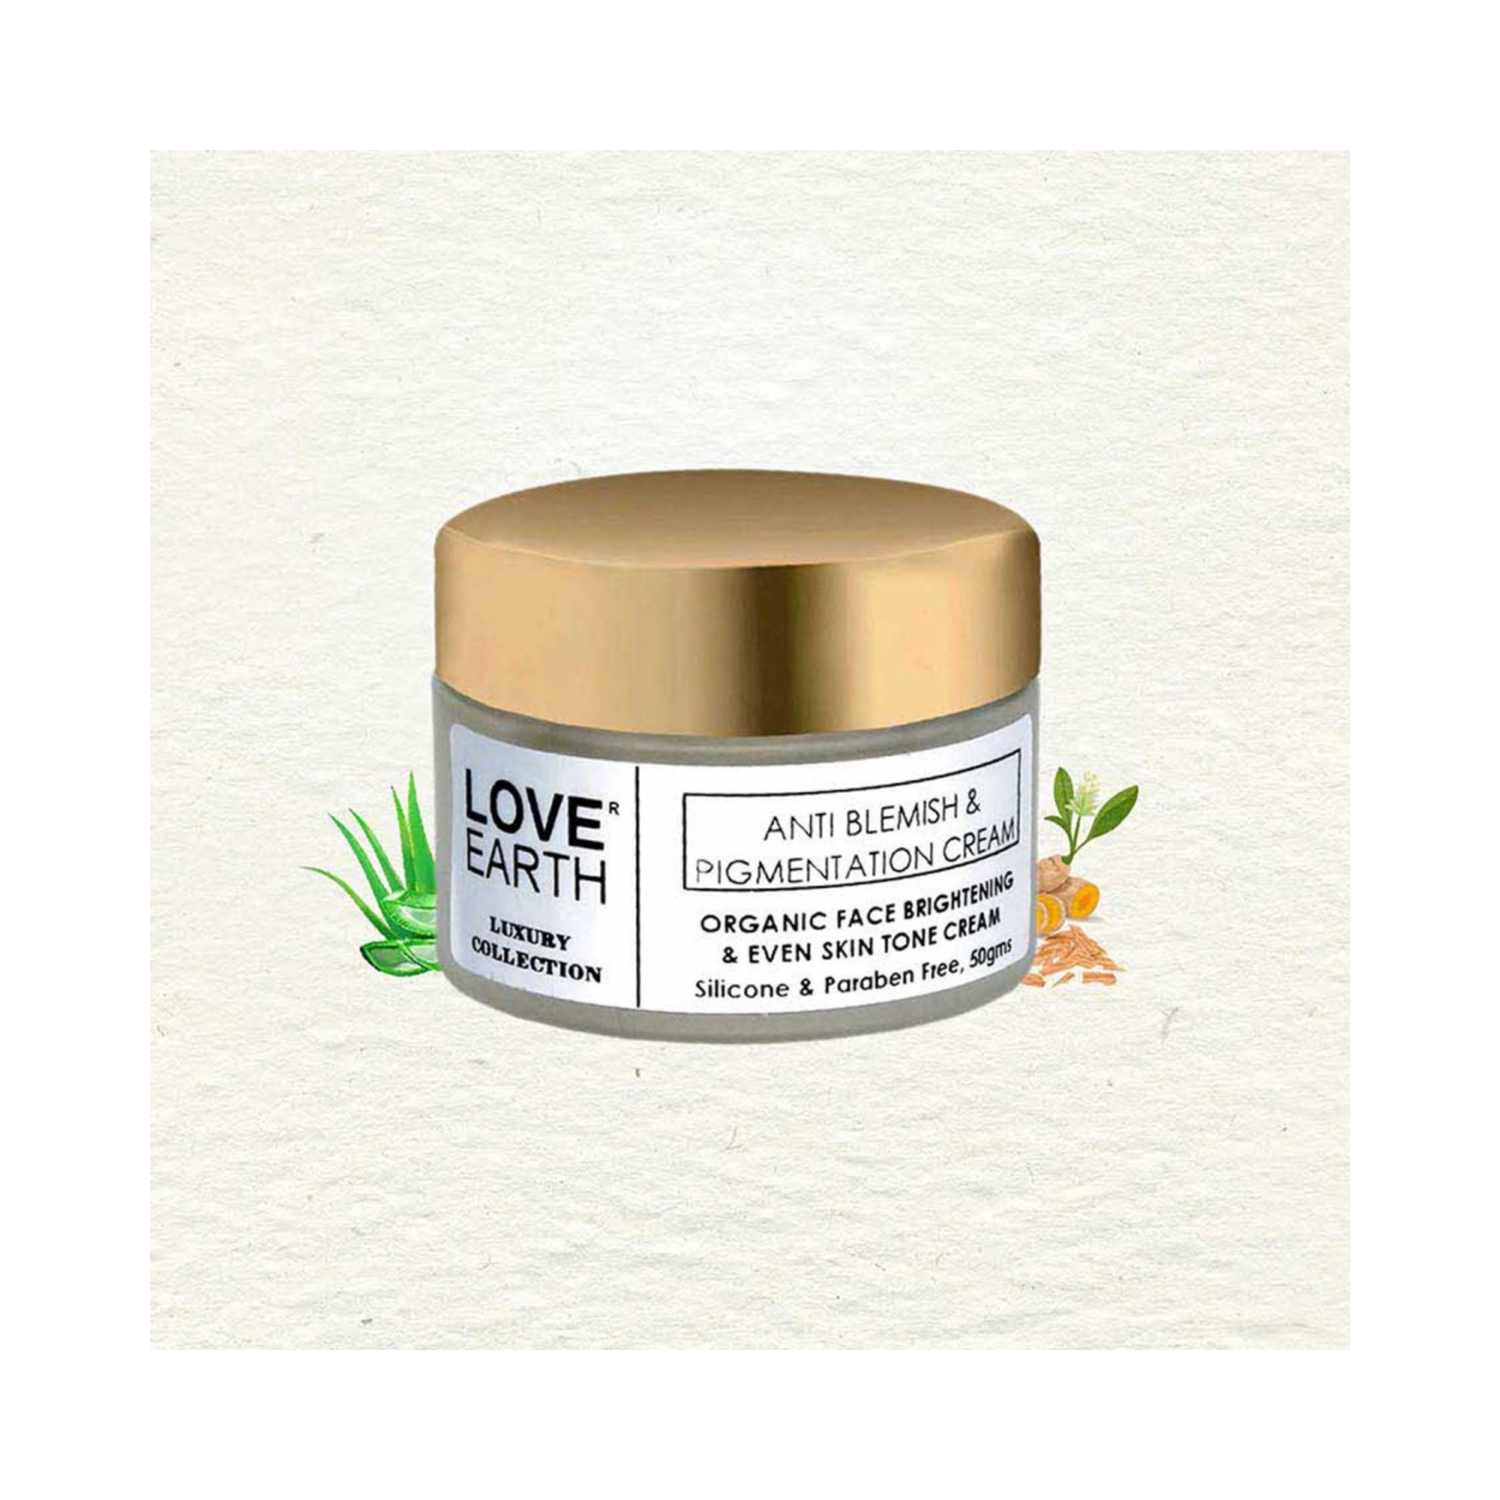 Love Earth | Love Earth Anti-Blemish & Anti-Pigmentation Cream (50g)